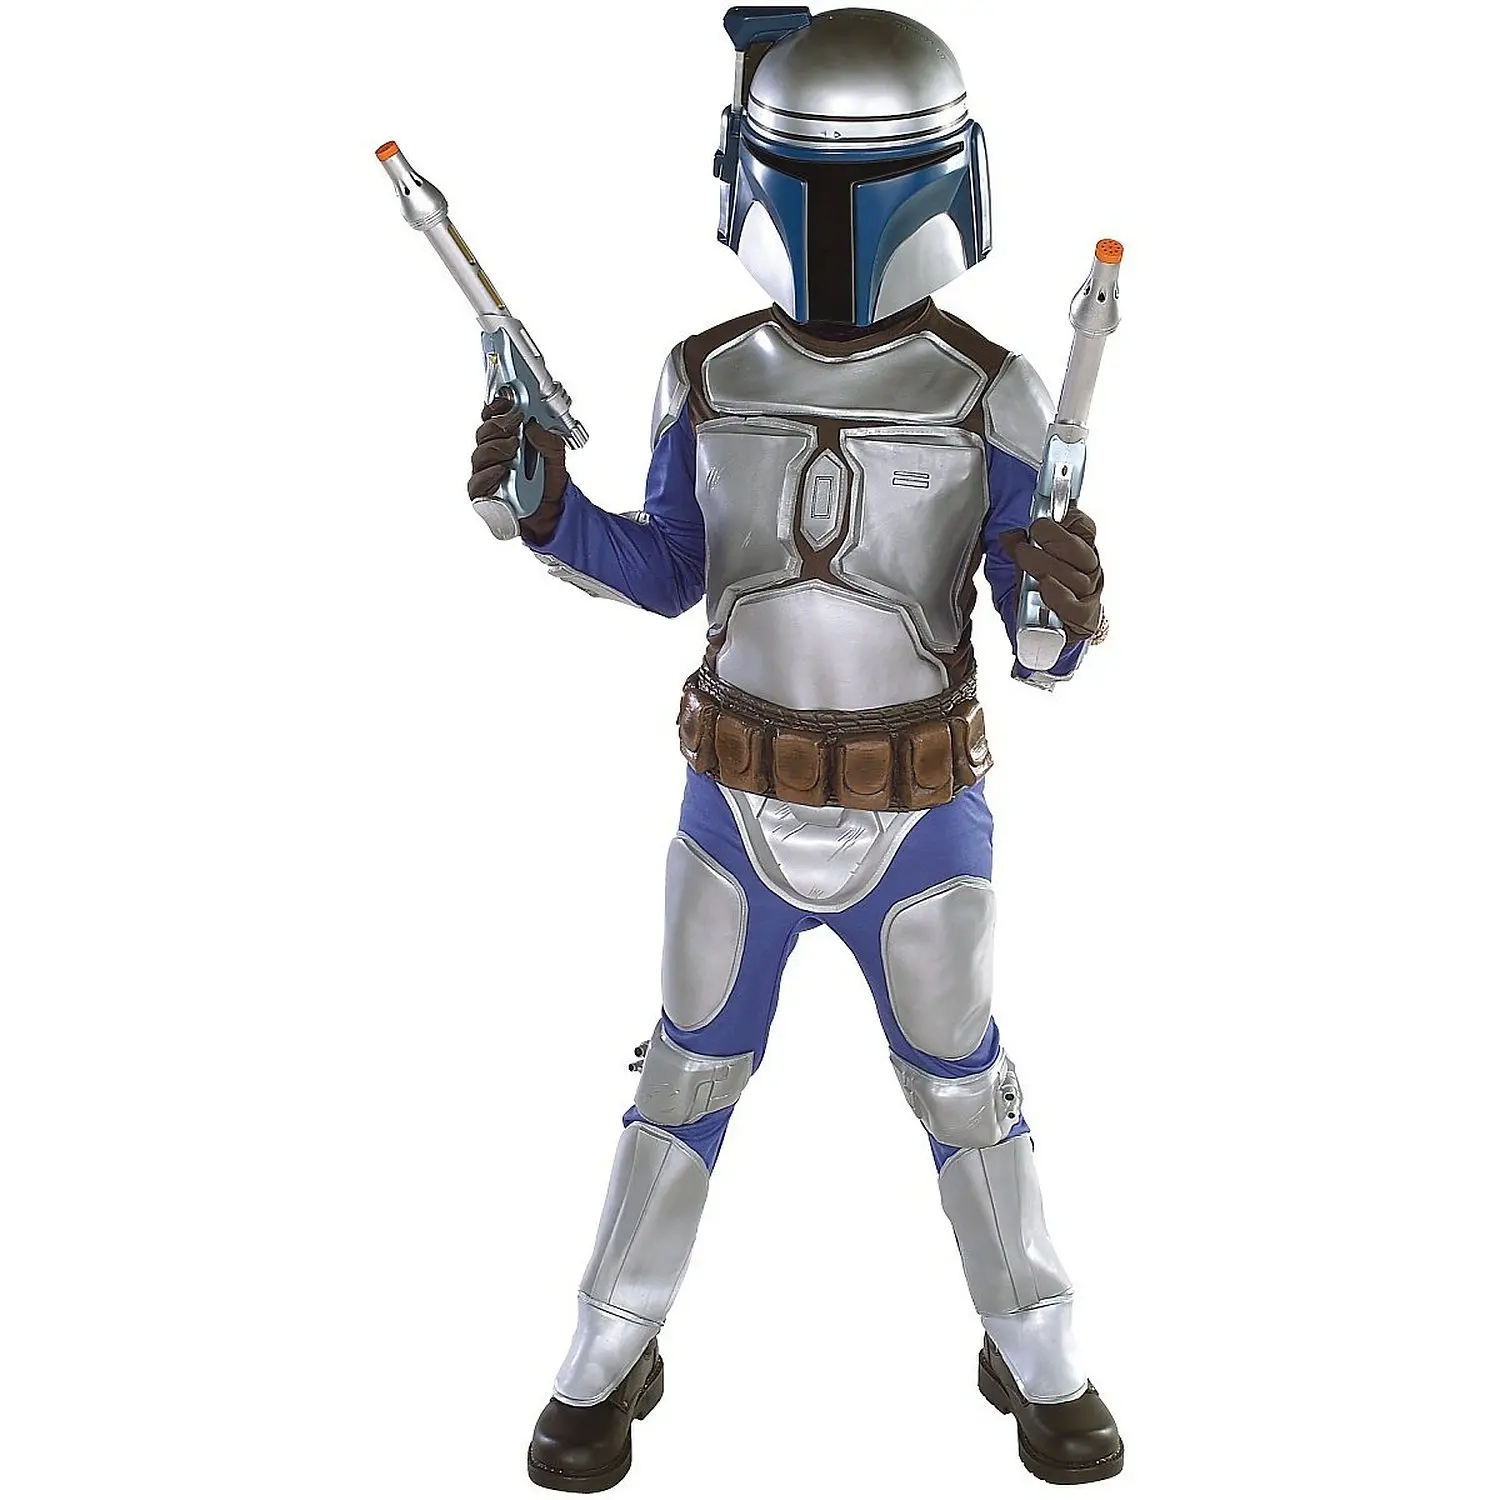 47.03. Kids Deluxe Jango Fett Star Wars Costume. 